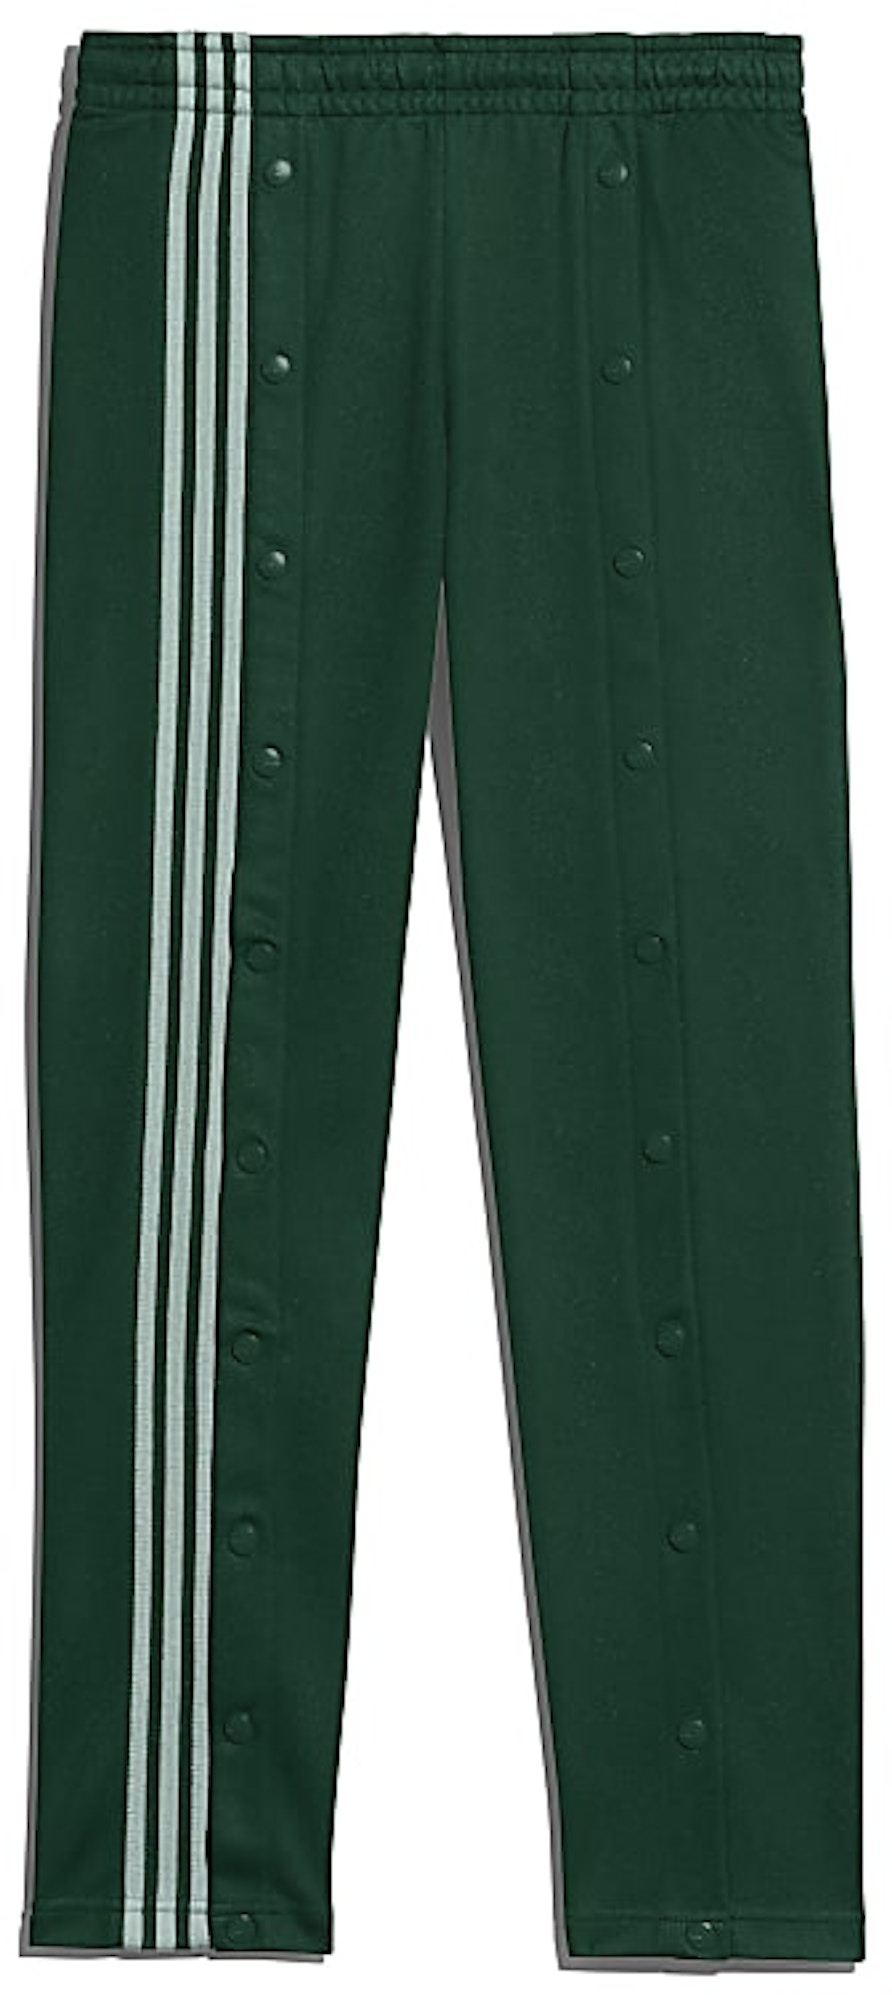 adidas Ivy Park Track Pants (Gender Neutral) Dark Green - FW20